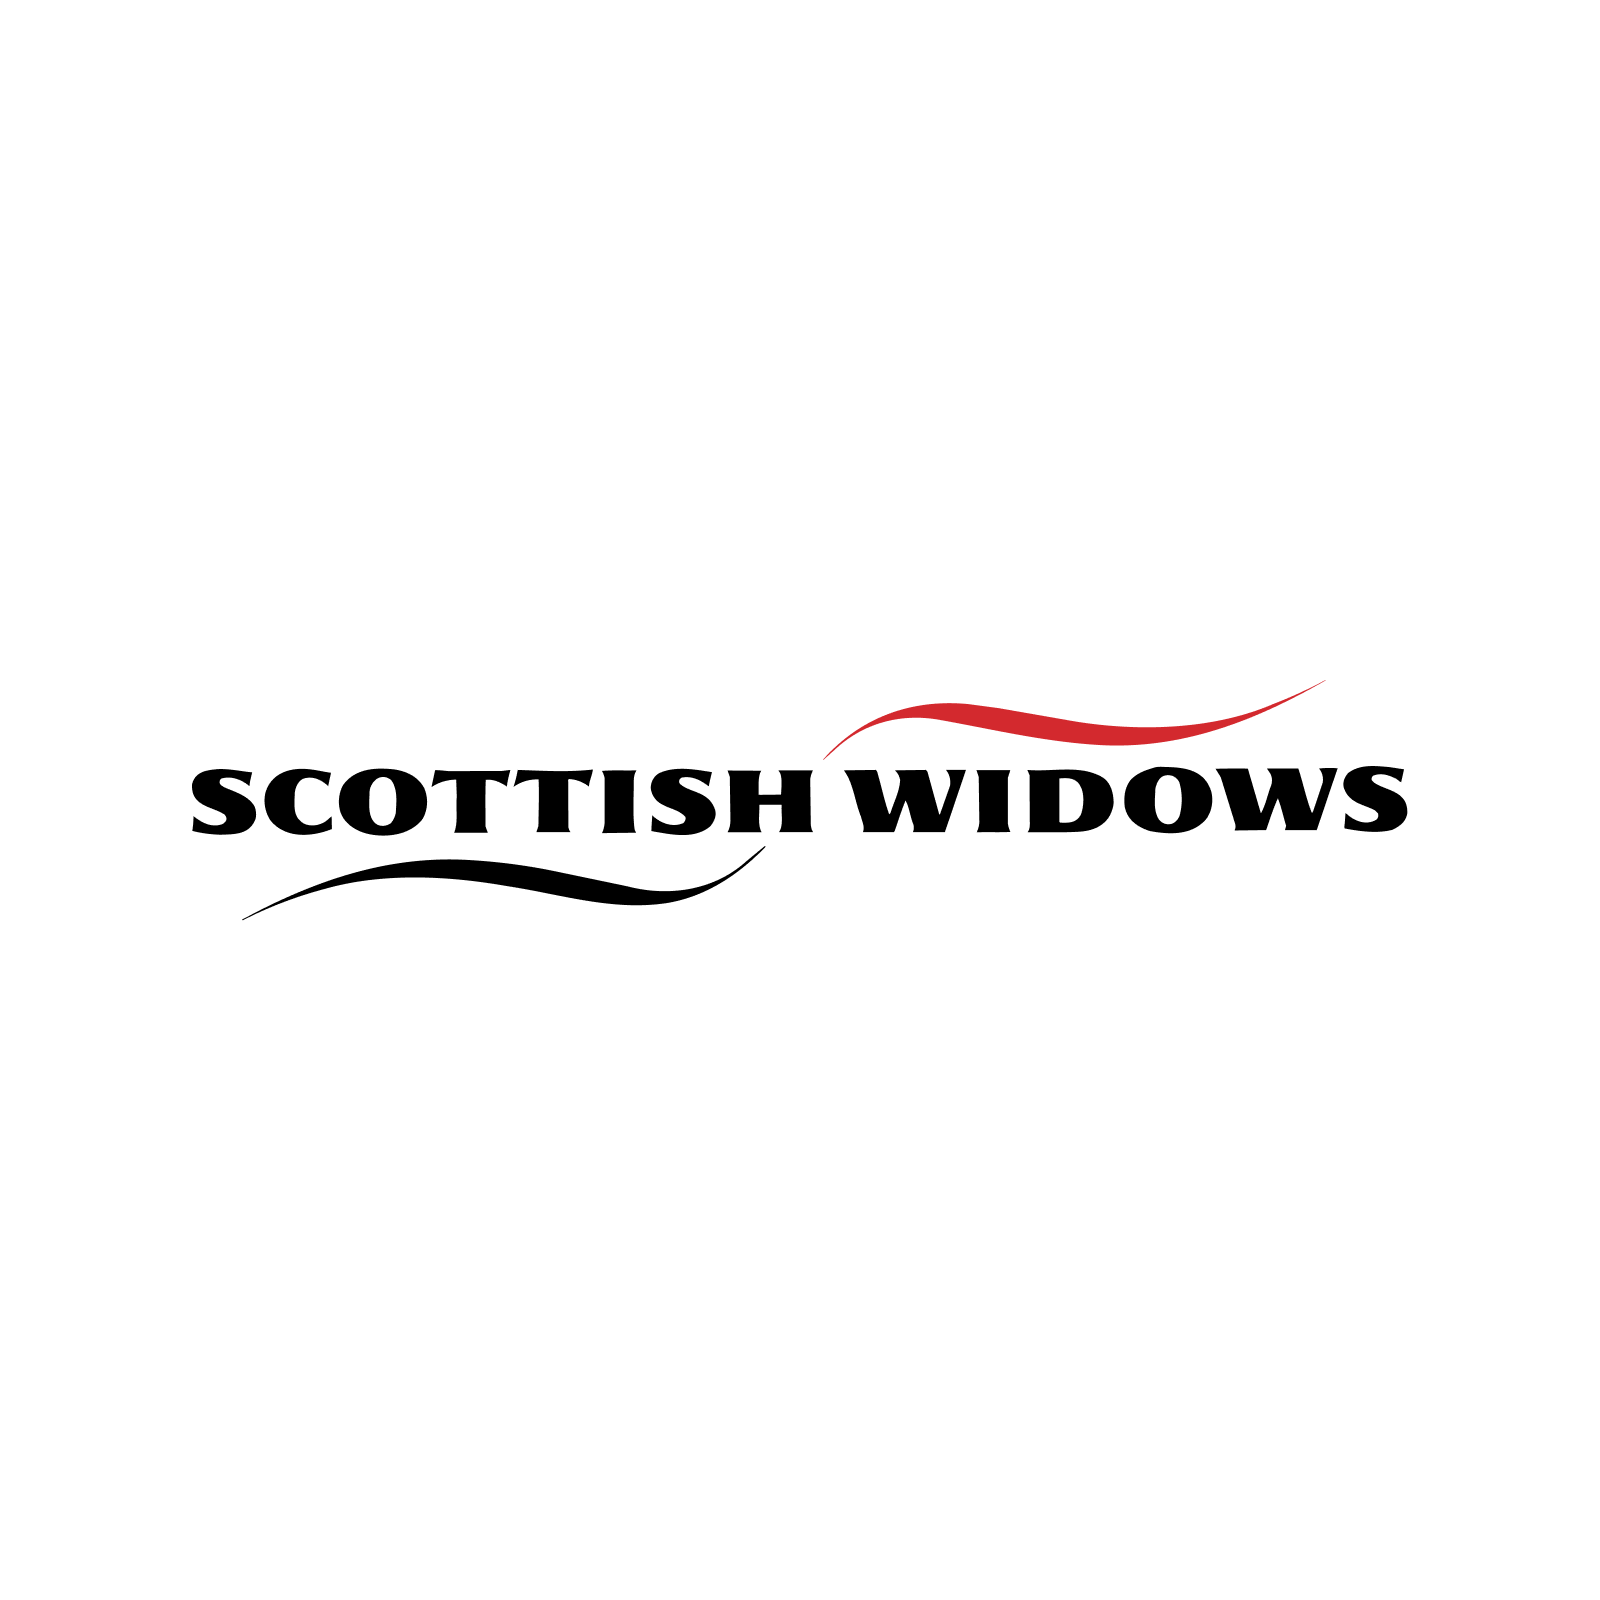 scottish widows